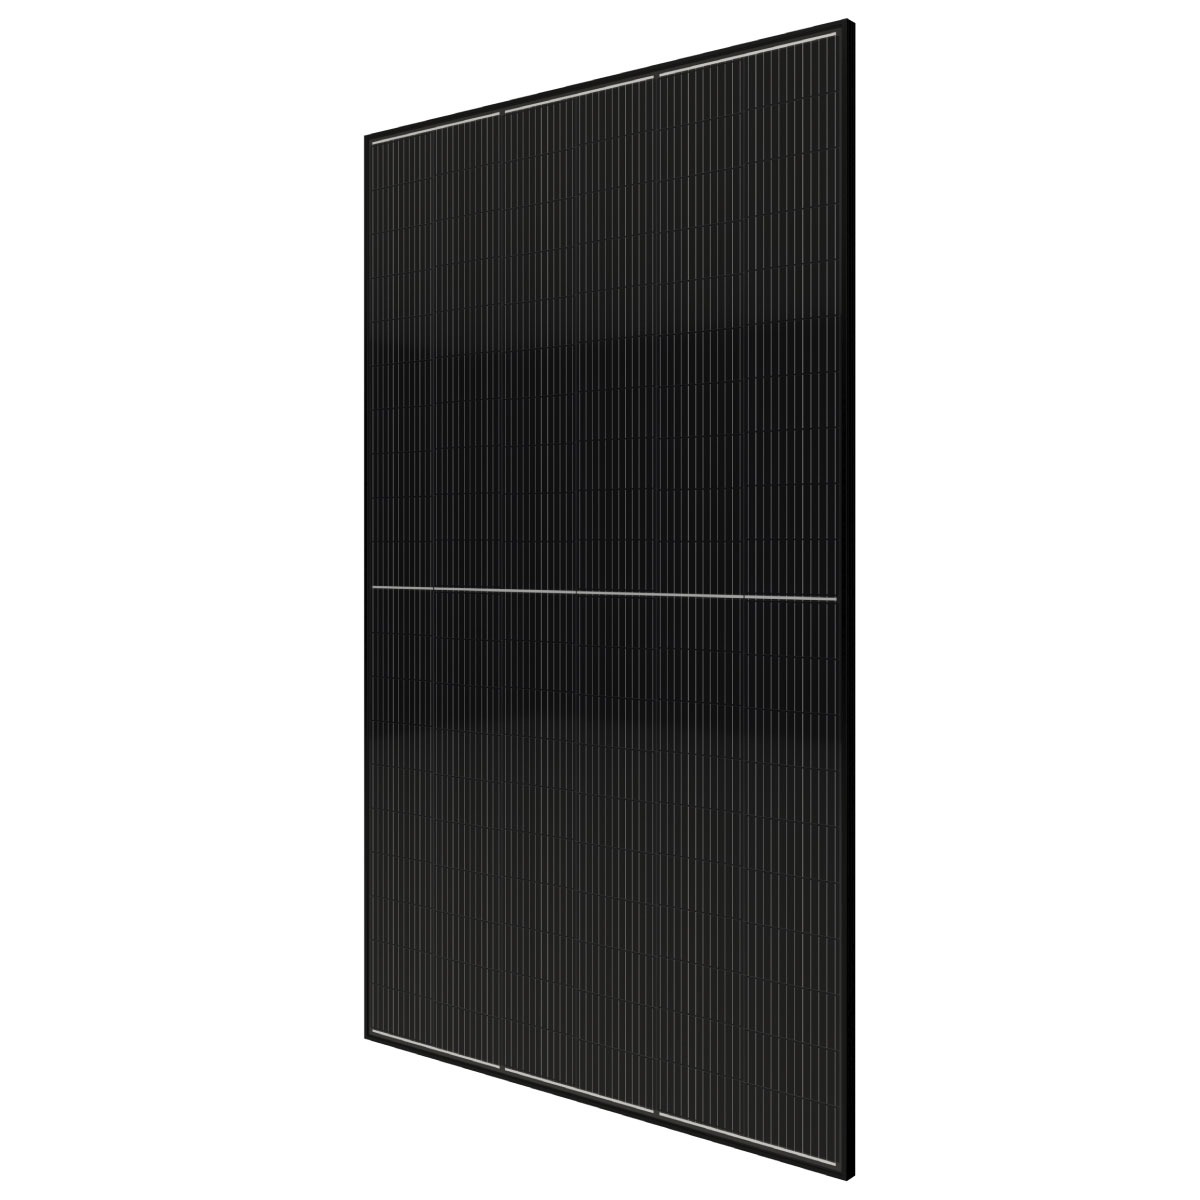 TommaTech 600Wp 120PM M12 Dark Series Solar Panel